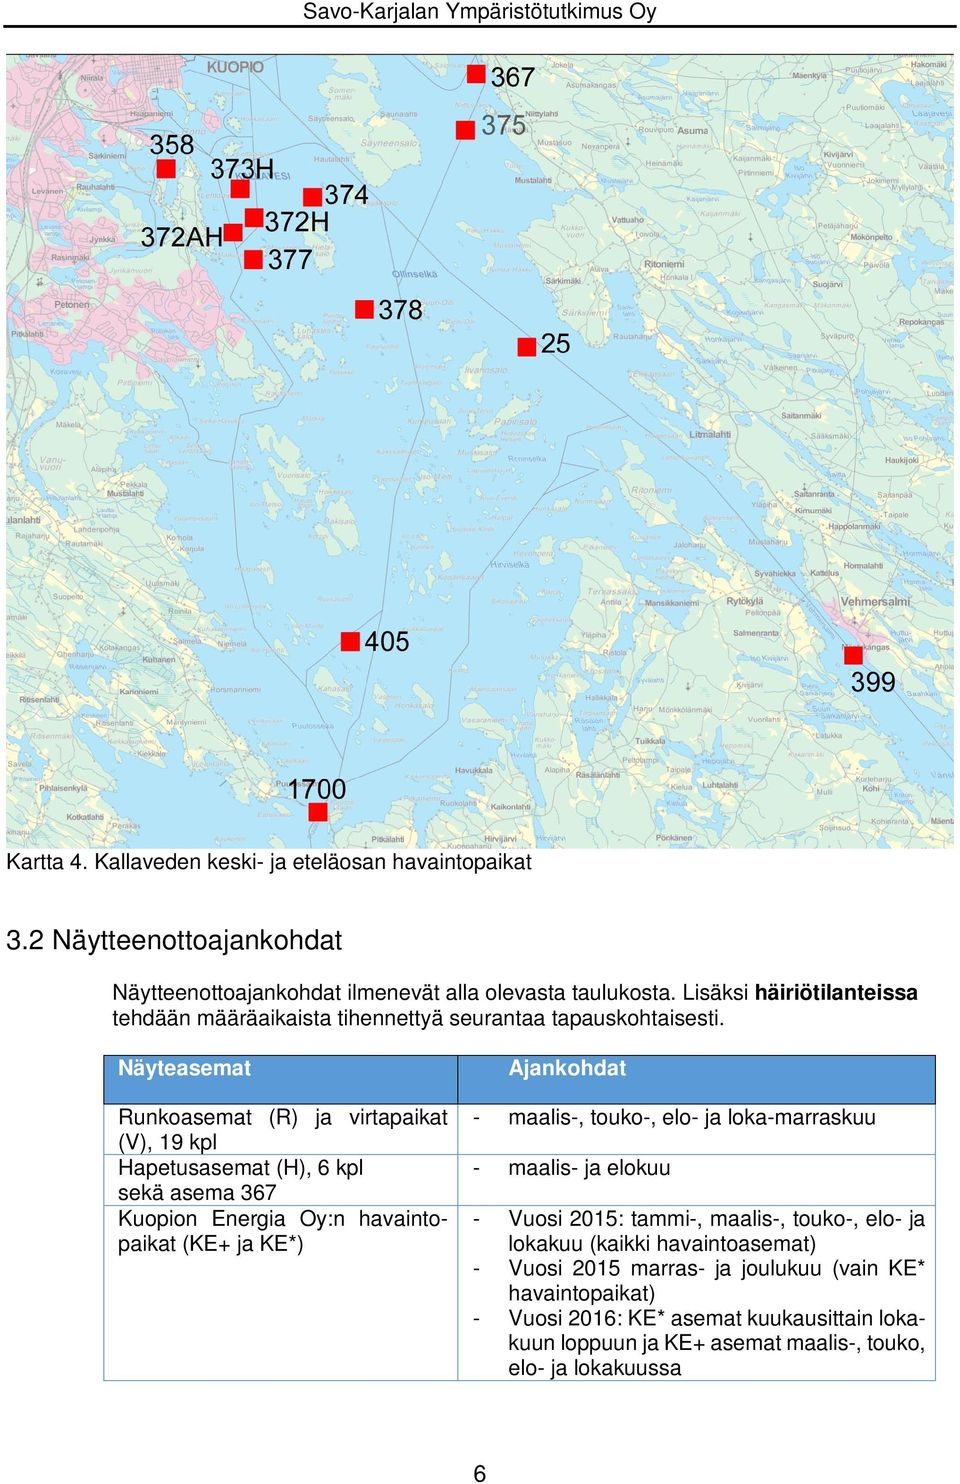 Näyteasemat Runkoasemat (R) ja virtapaikat (V), 19 kpl Hapetusasemat (H), 6 kpl sekä asema 367 Kuopion Energia Oy:n havaintopaikat (KE+ ja KE*) Ajankohdat - maalis-,